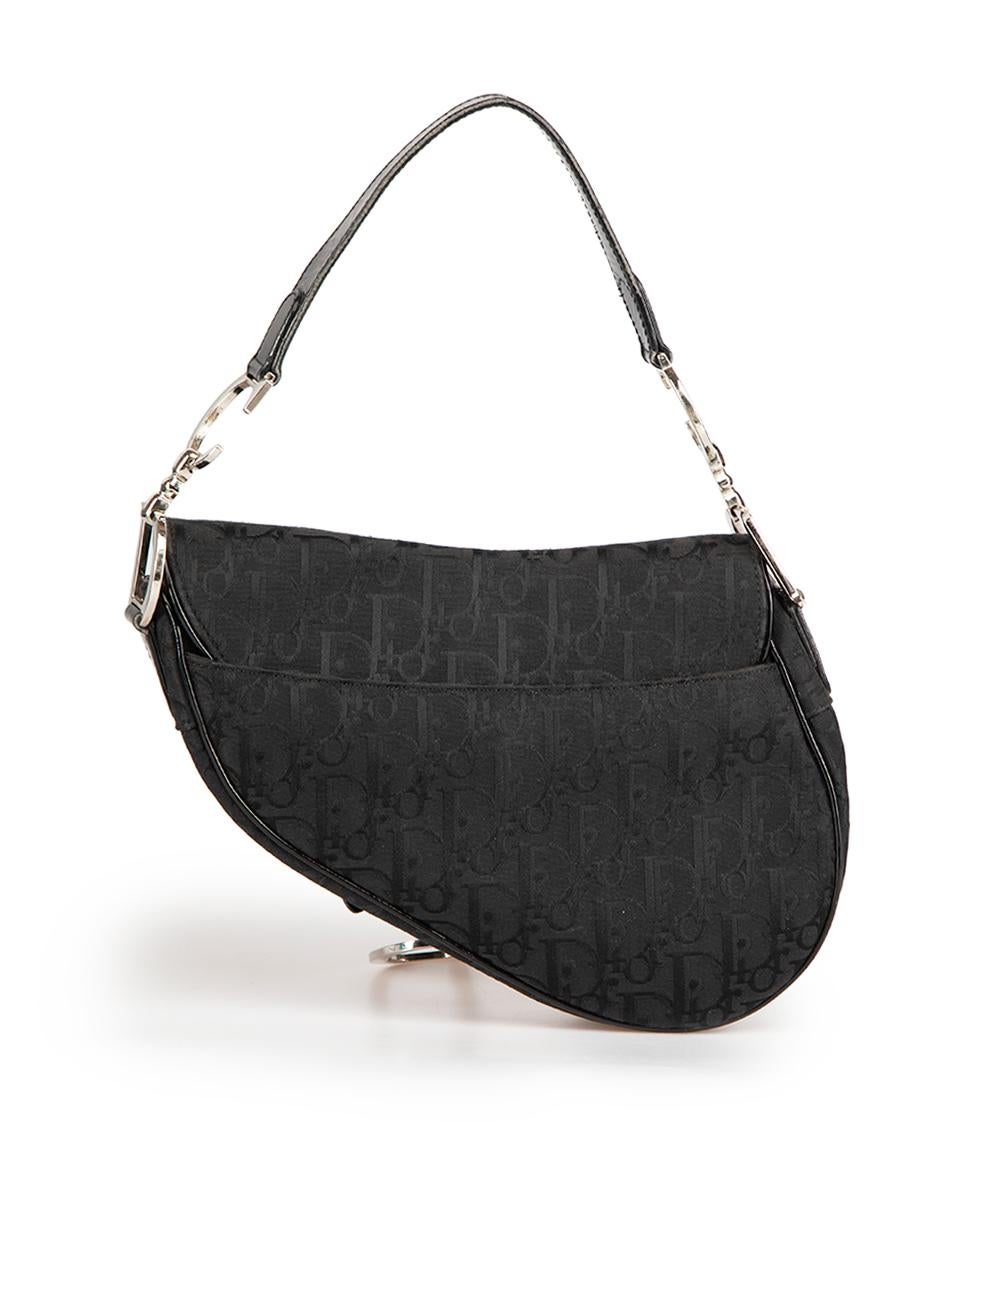 Dior Black Diorissimo Jacquard Saddle Bag In Good Condition For Sale In London, GB